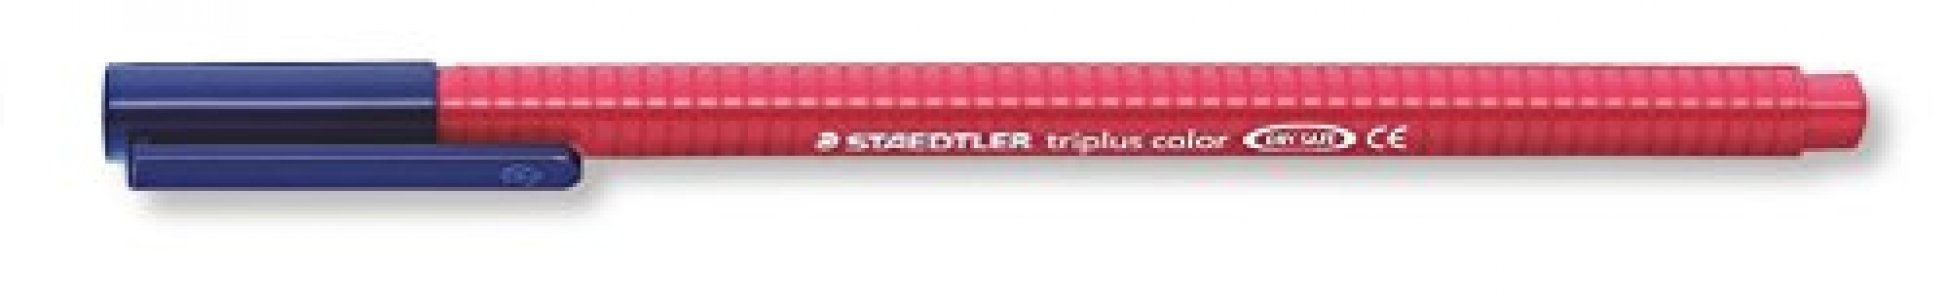 Staedtler 323 Triplus Colour Fibre-Tip Pens, 1.0 mm, Green, Pack